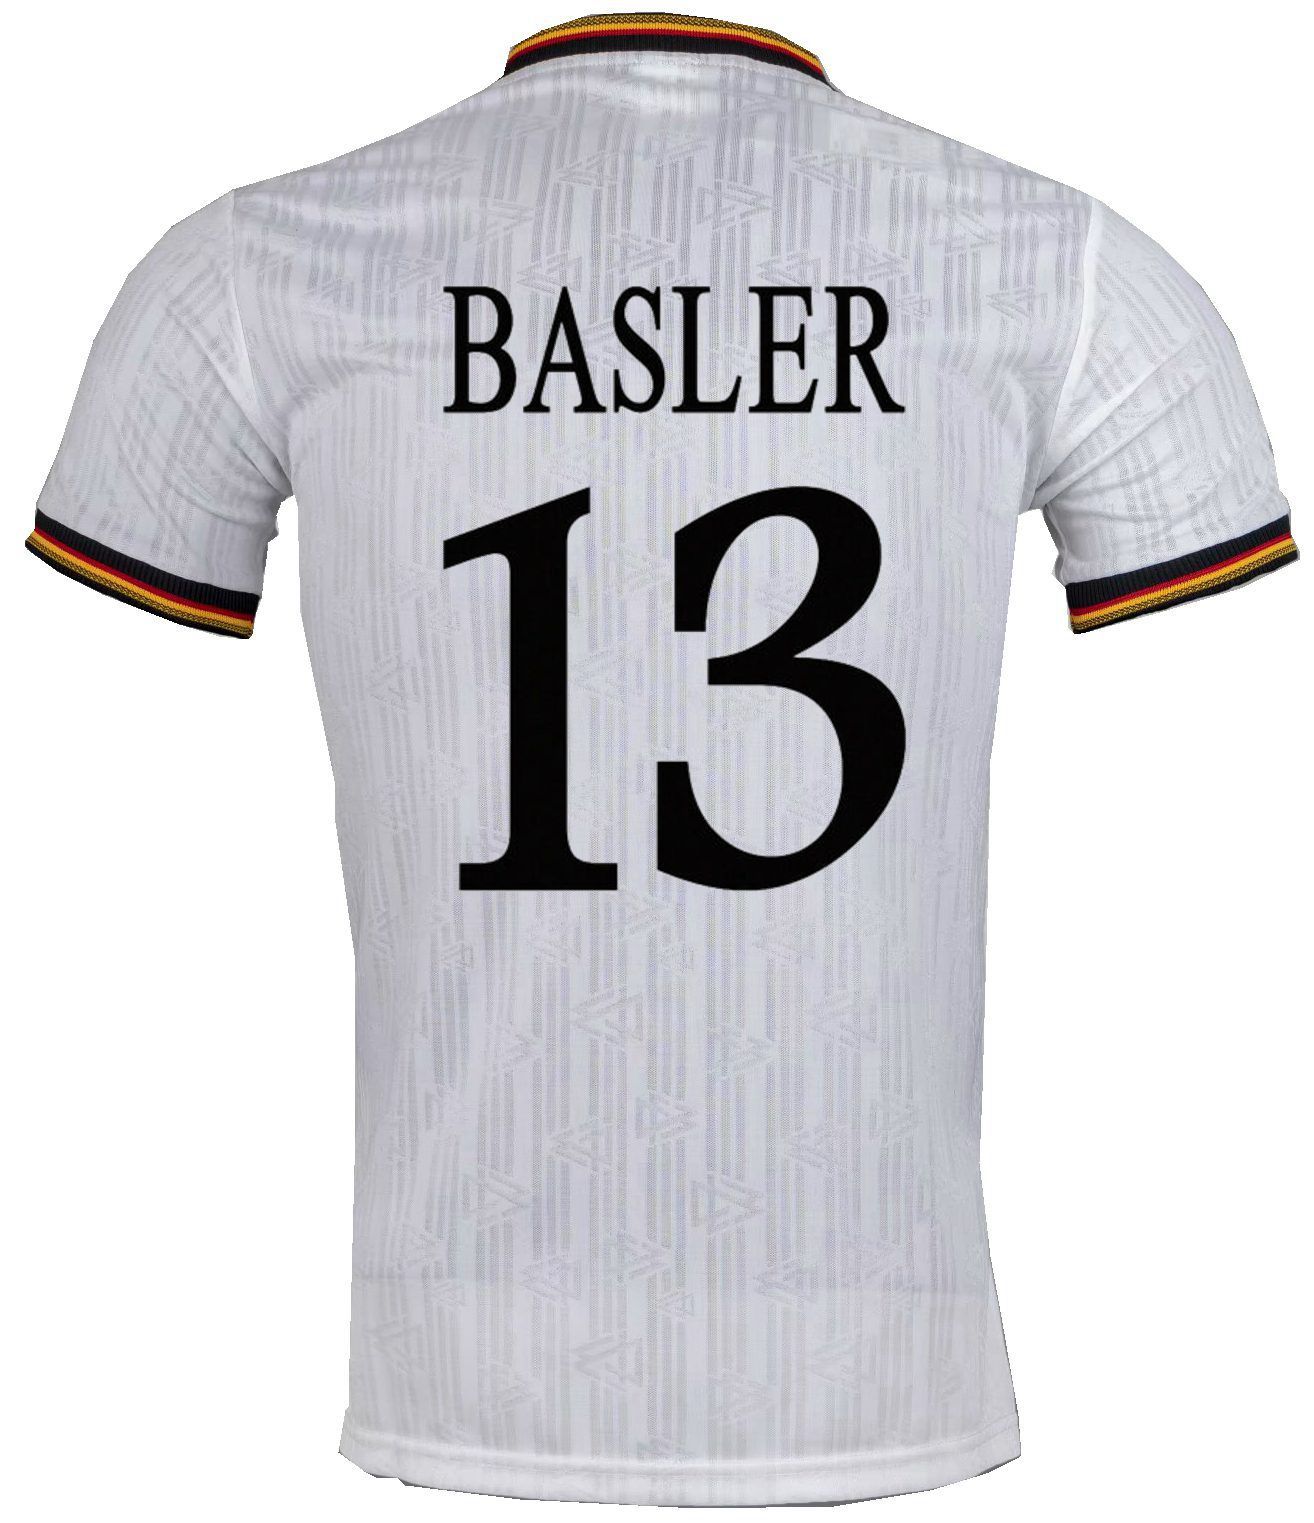 Basler 13